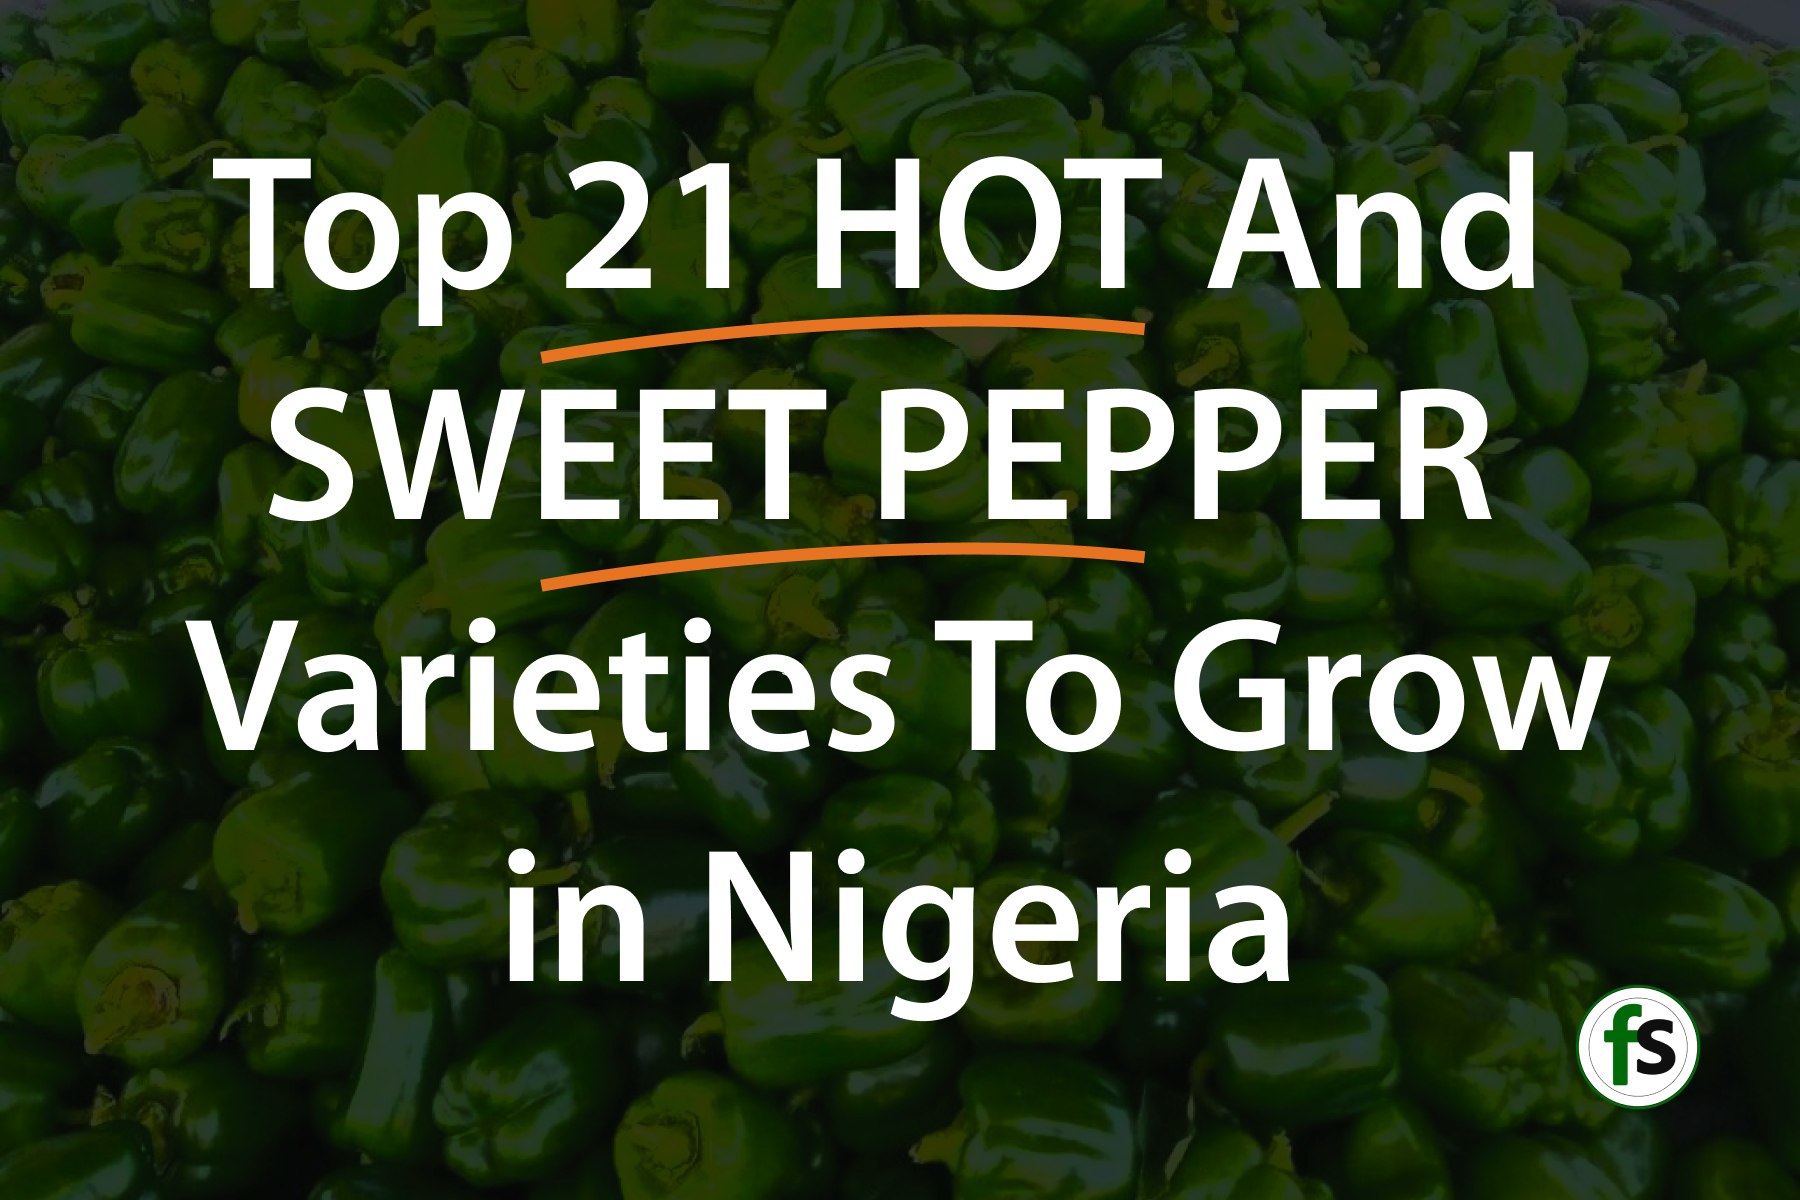 Top 21 Hot And Sweet Pepper Varieties To Grow In Nigeria